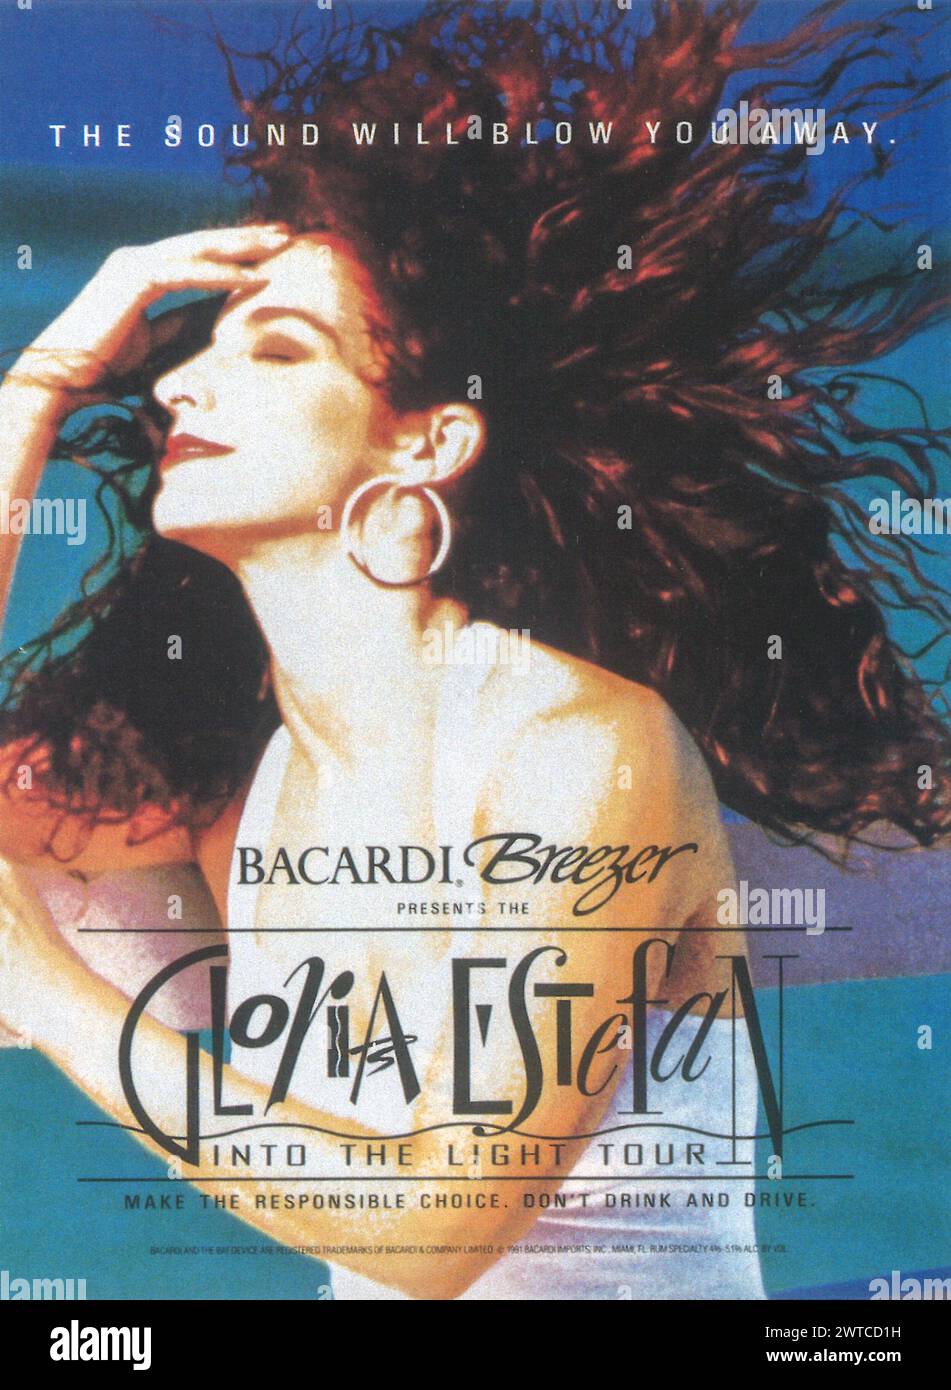 1991 GLORIA ESTEFAN BACARDI BREEZER INTO THE LIGHT TOUR ALBUM POSTER Stock Photo